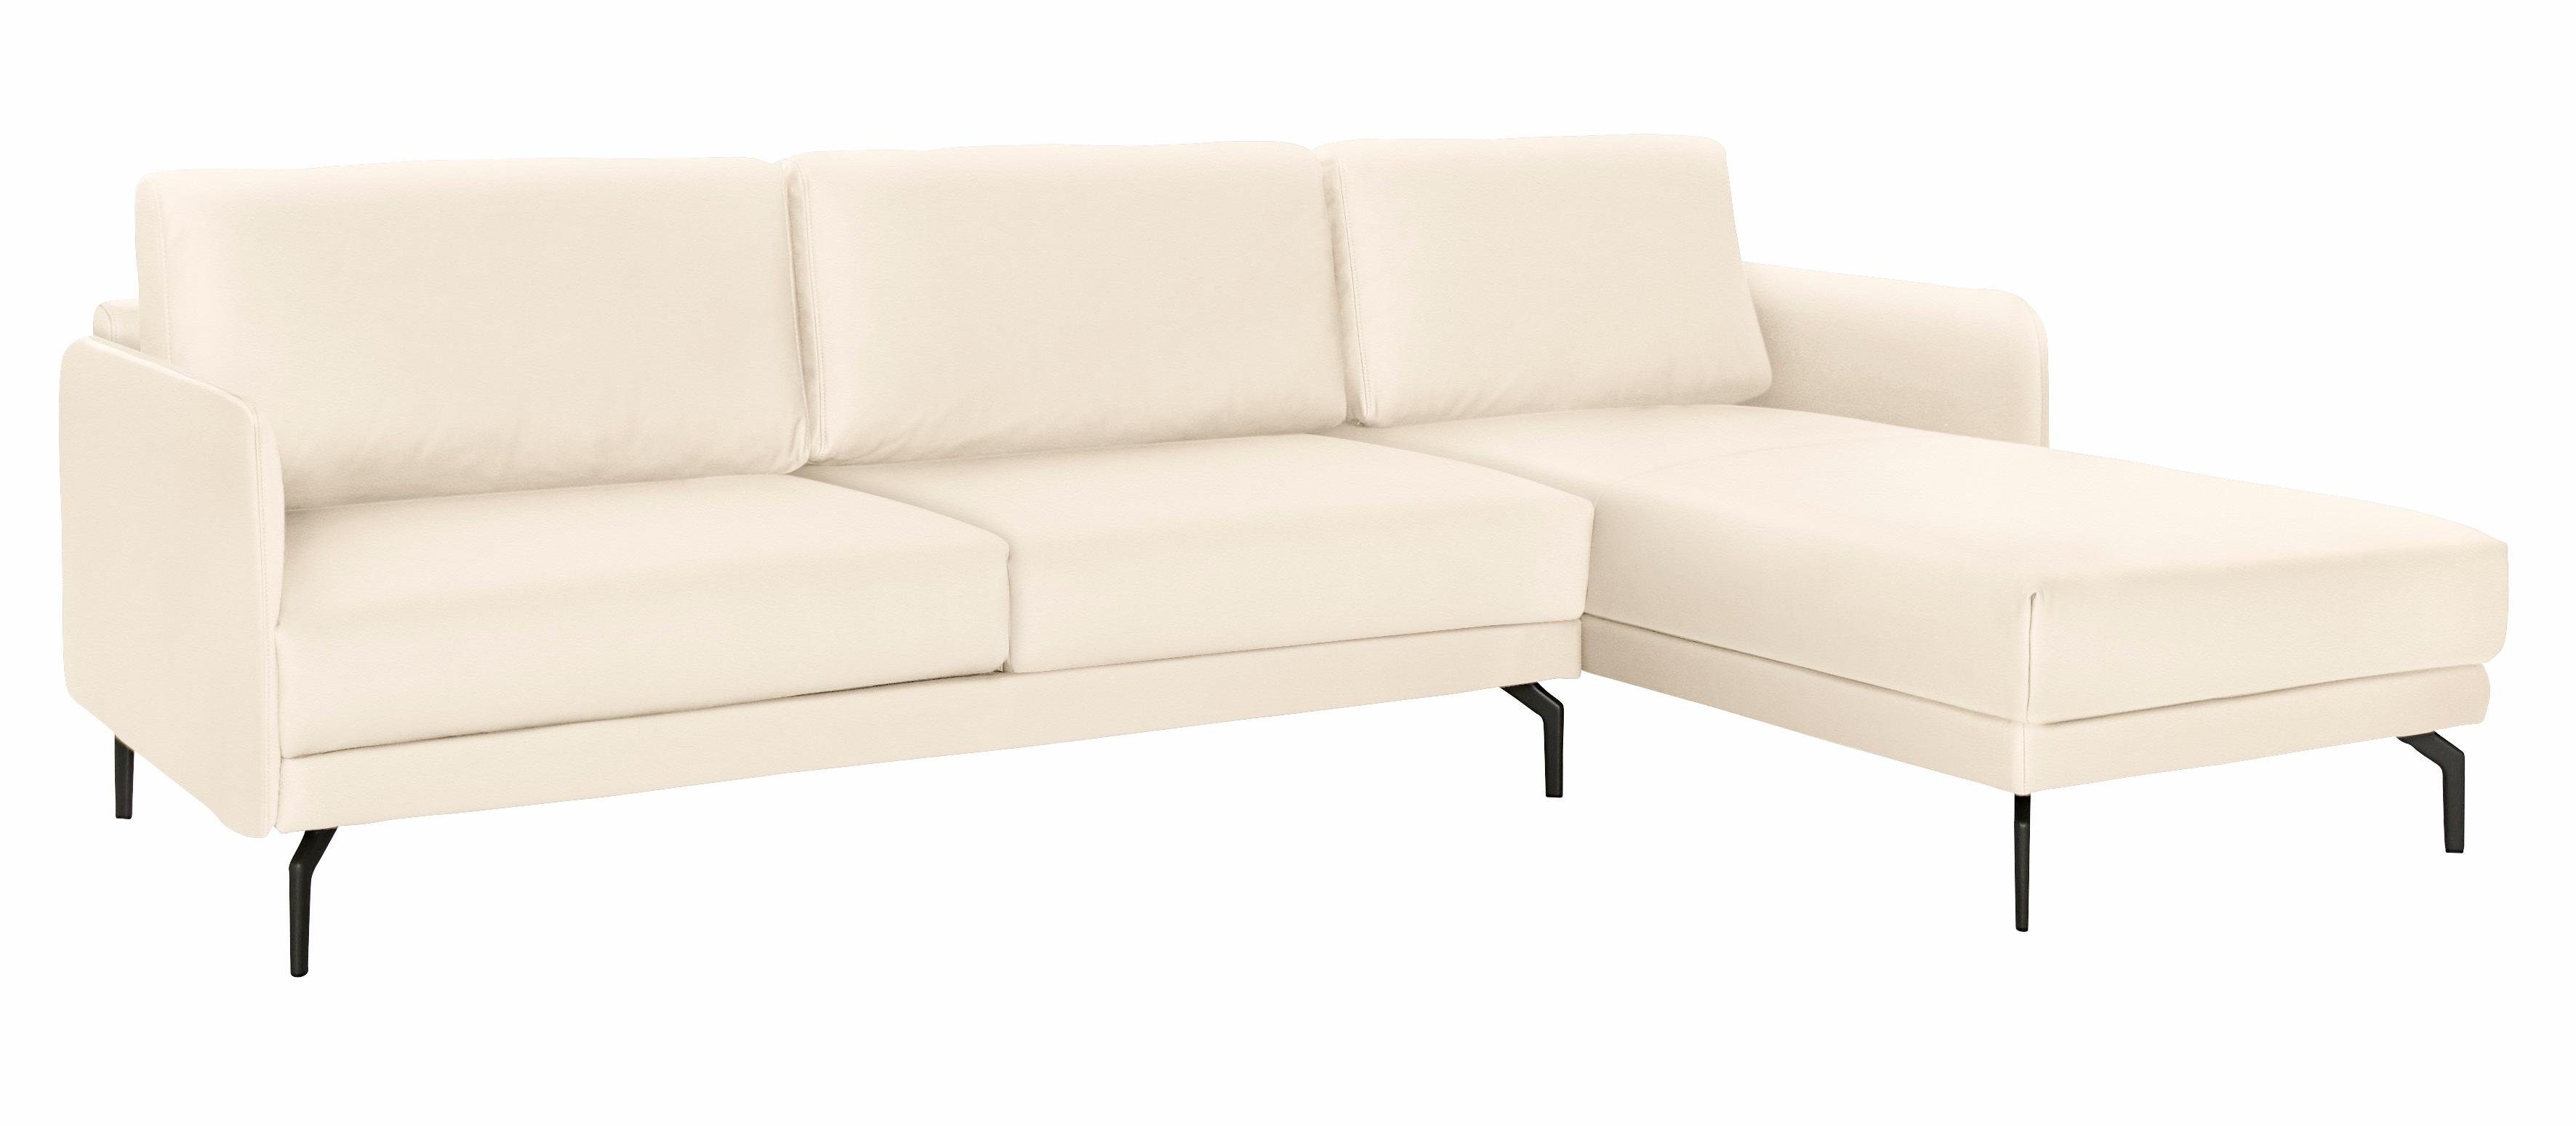 sofa Armlehne cm, Alugussfuß schmal, Breite hülsta 274 hs.450, Ecksofa sehr Umbragrau